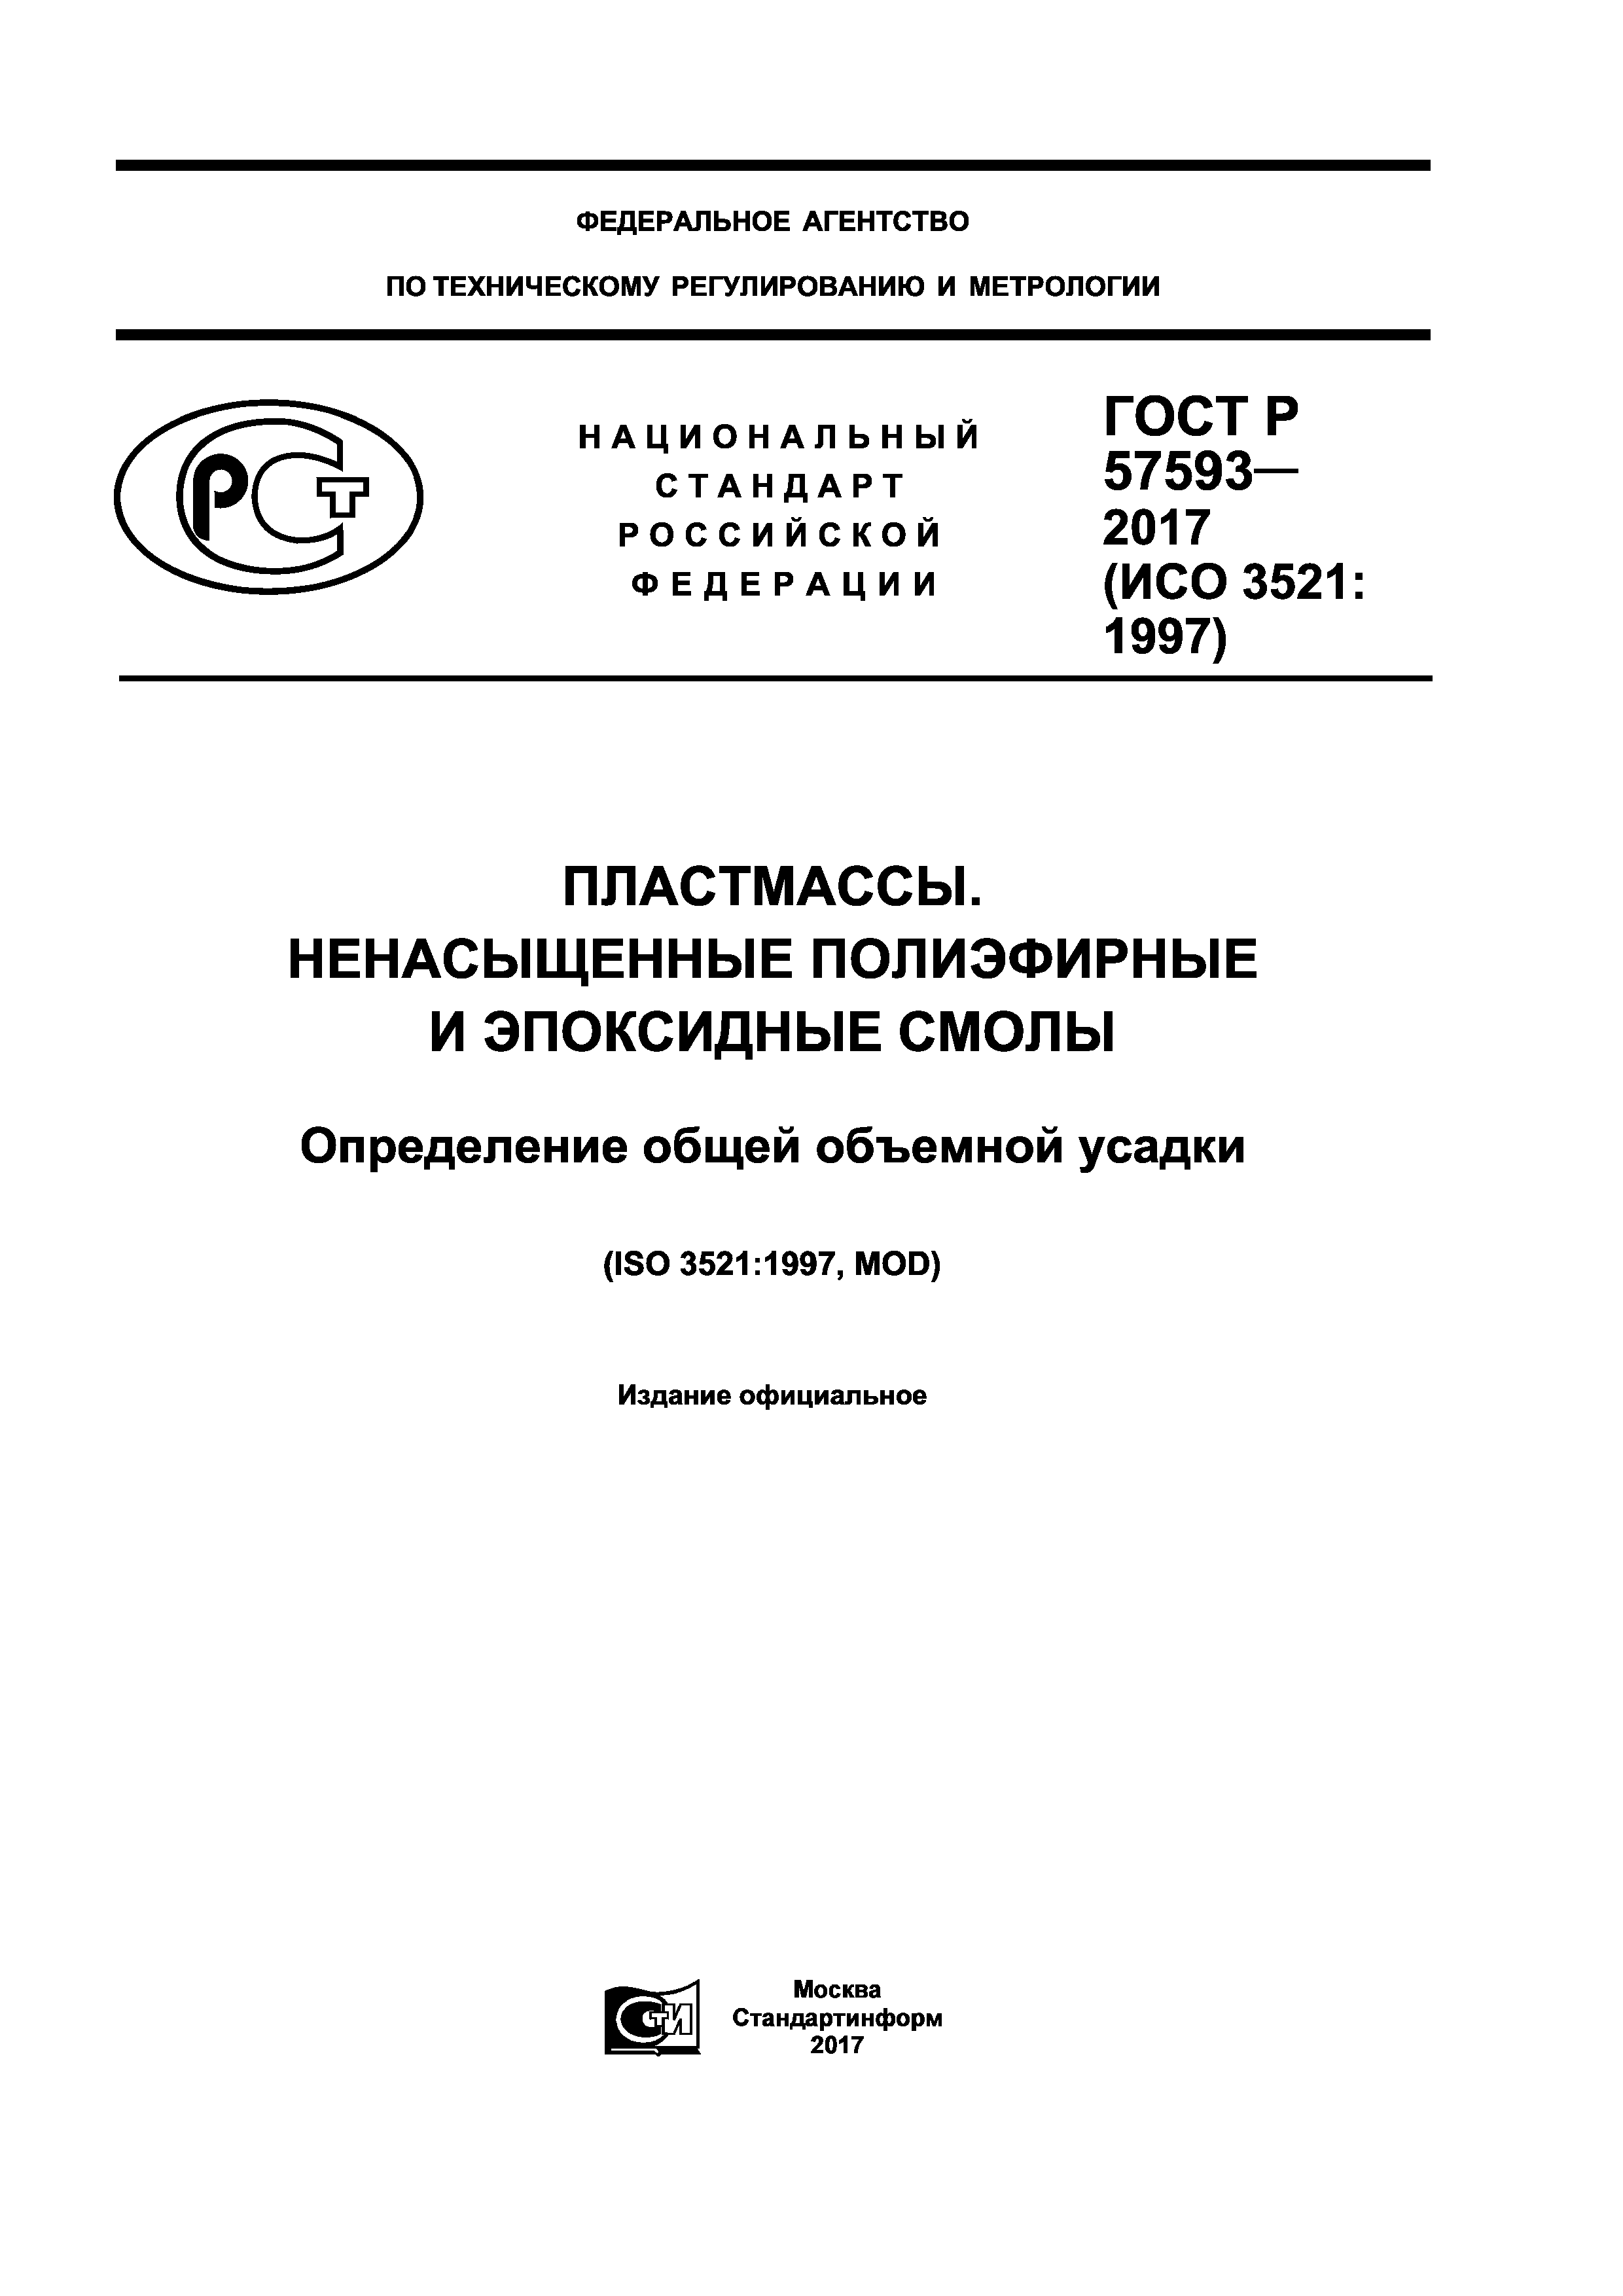 ГОСТ Р 57593-2017